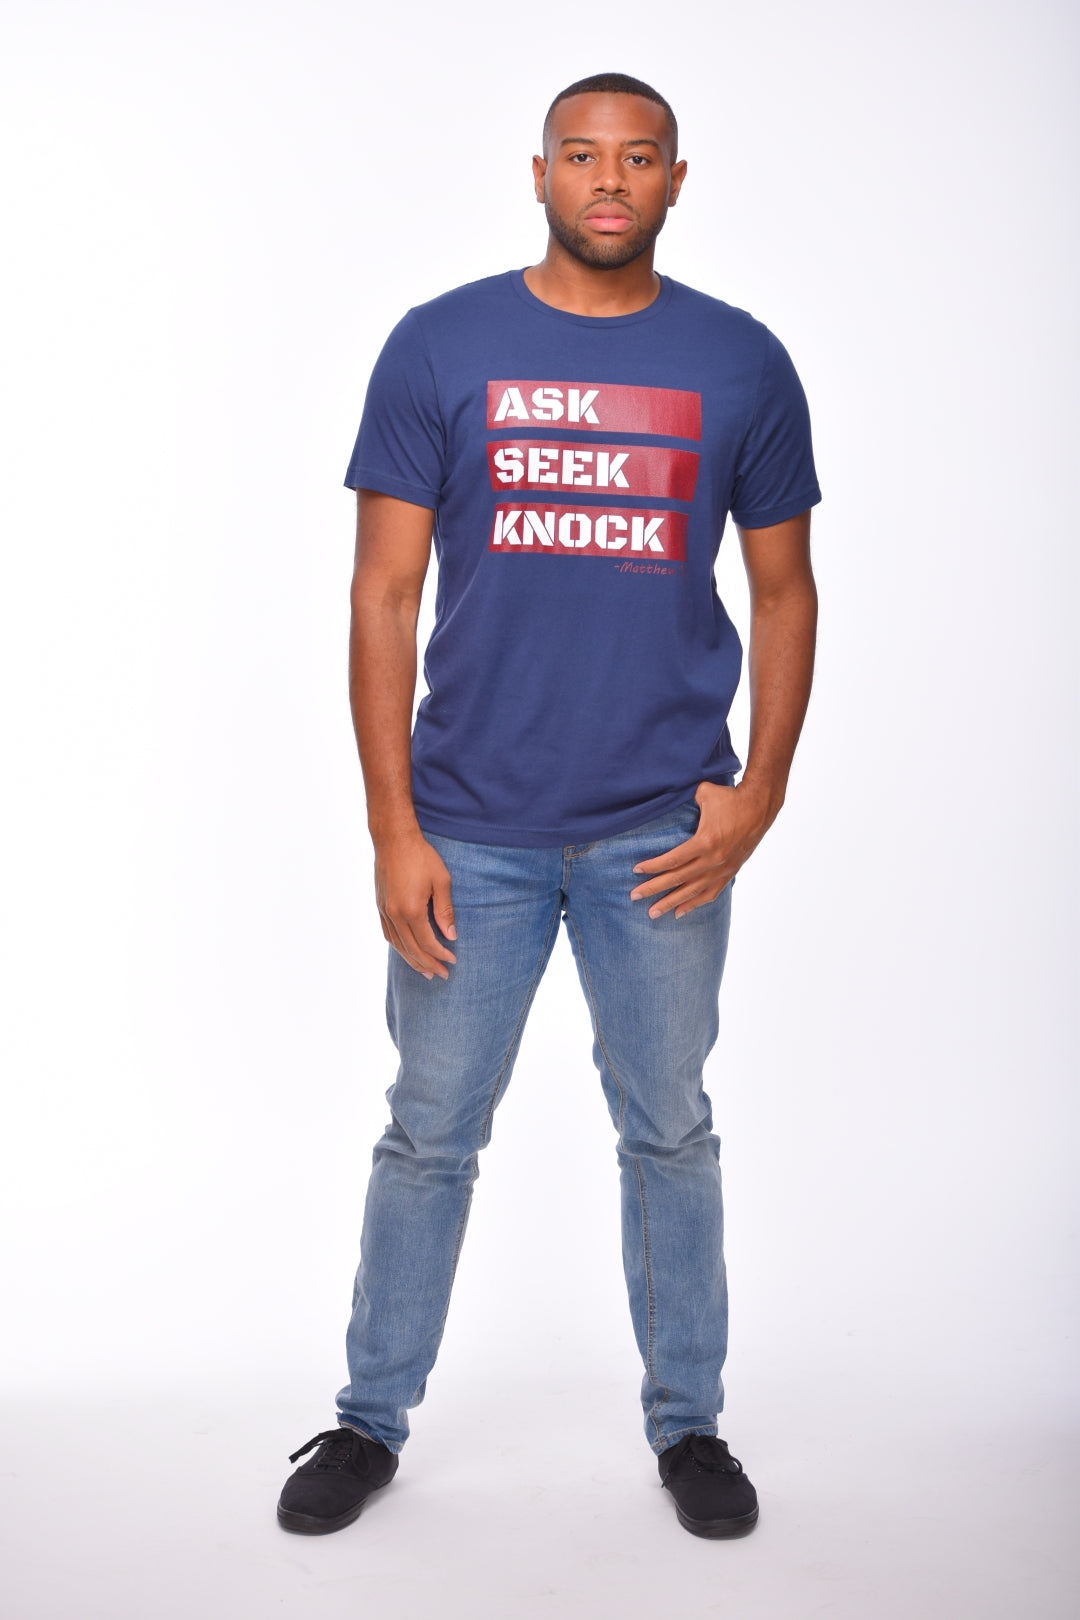 Ask Seek Knock Matthew 7:7 Unisex Premium T-Shirt